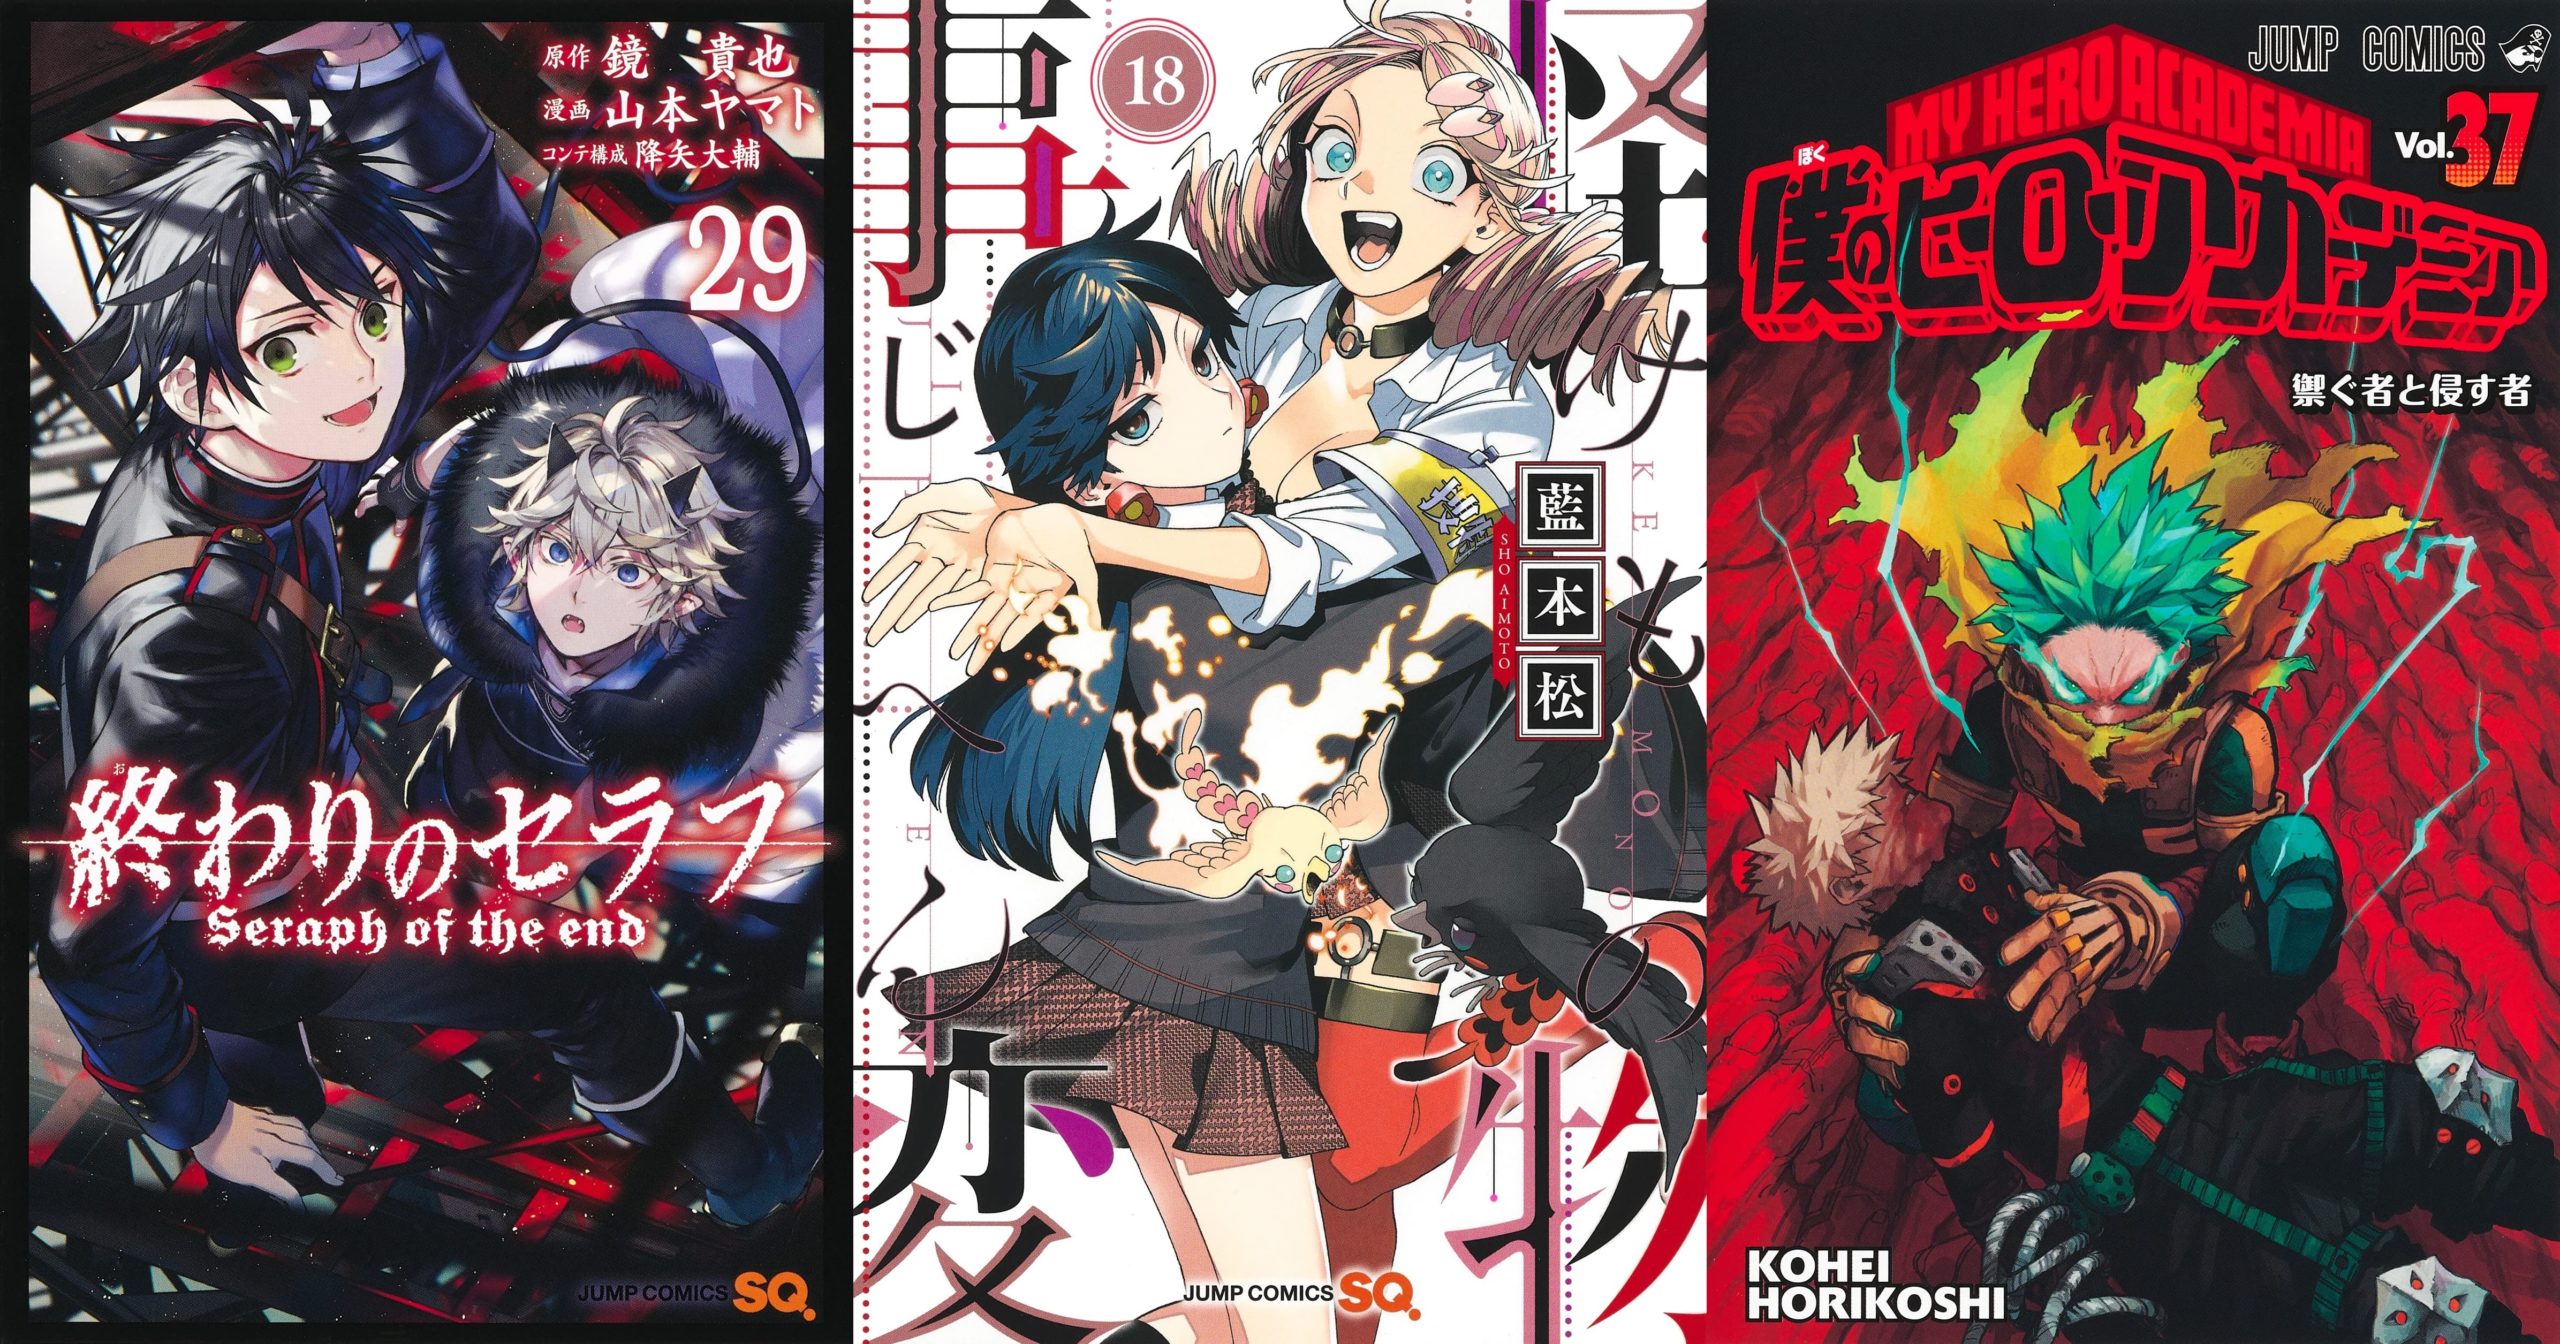 Ranking semanal: Light Novels mais Vendidas (Julho 10 - 16) - IntoxiAnime